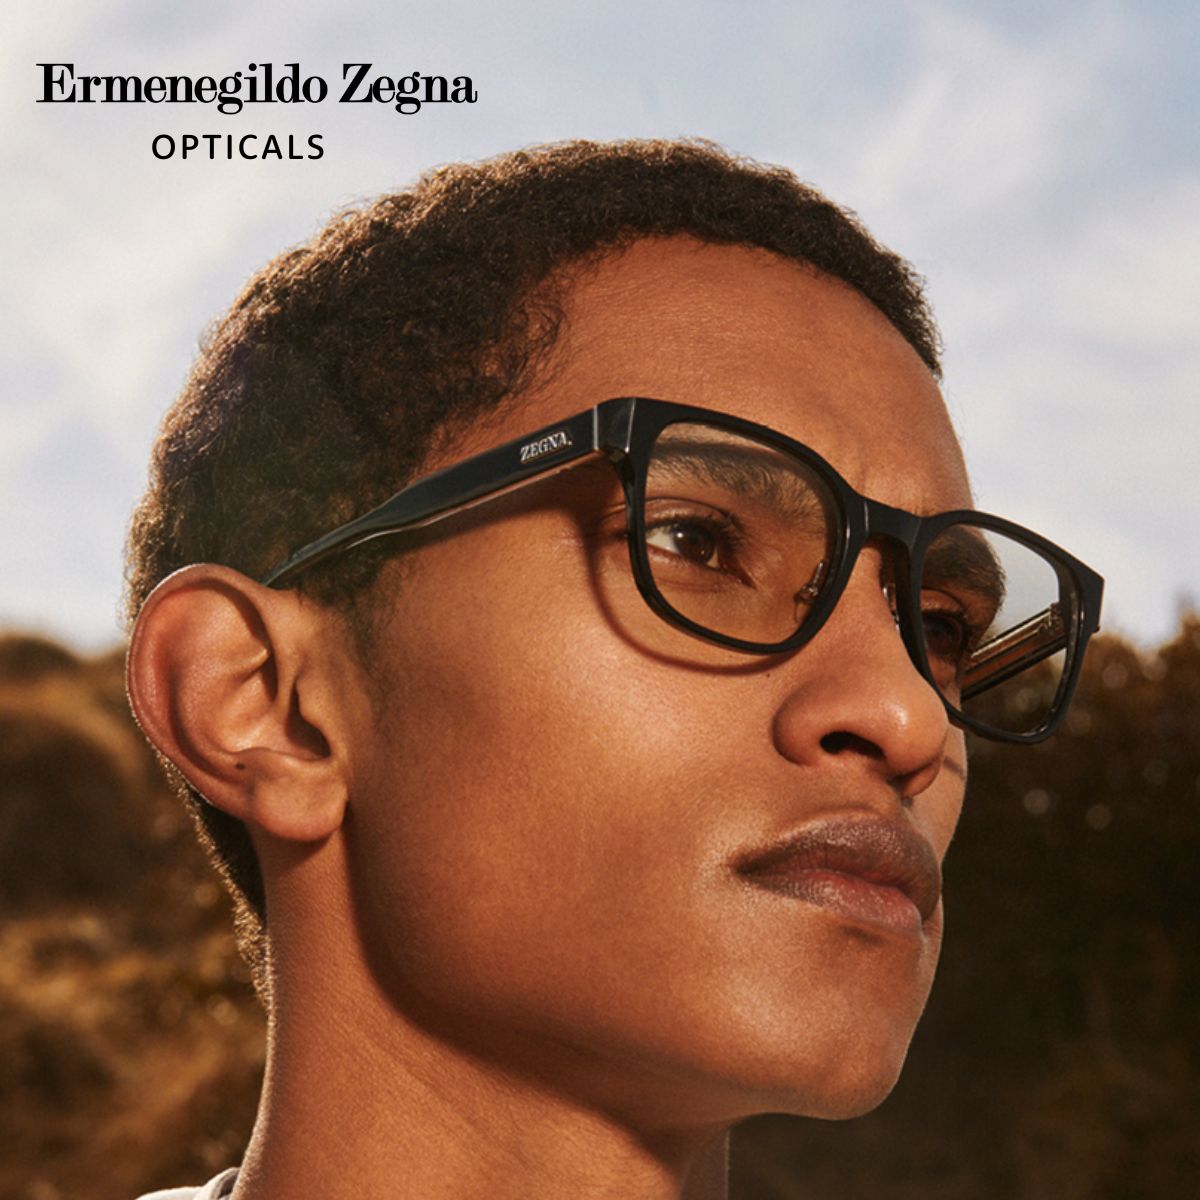 "Buy Zegna Eyewear Glasses For Both Men's & Women's | Zegna Optical Glasses At Optorium"